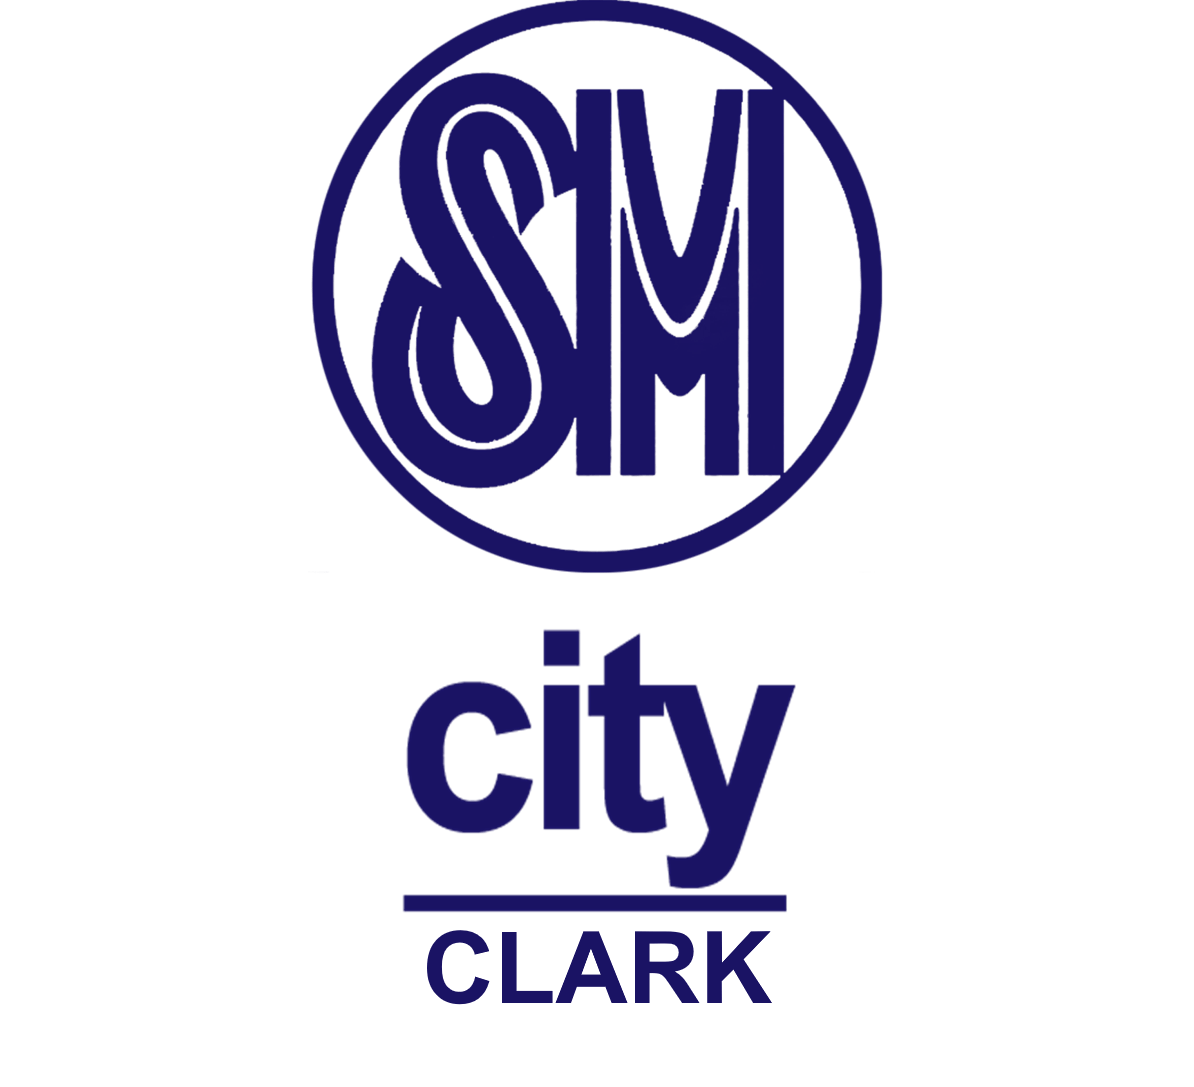 Clark Logo - sm city clark logo